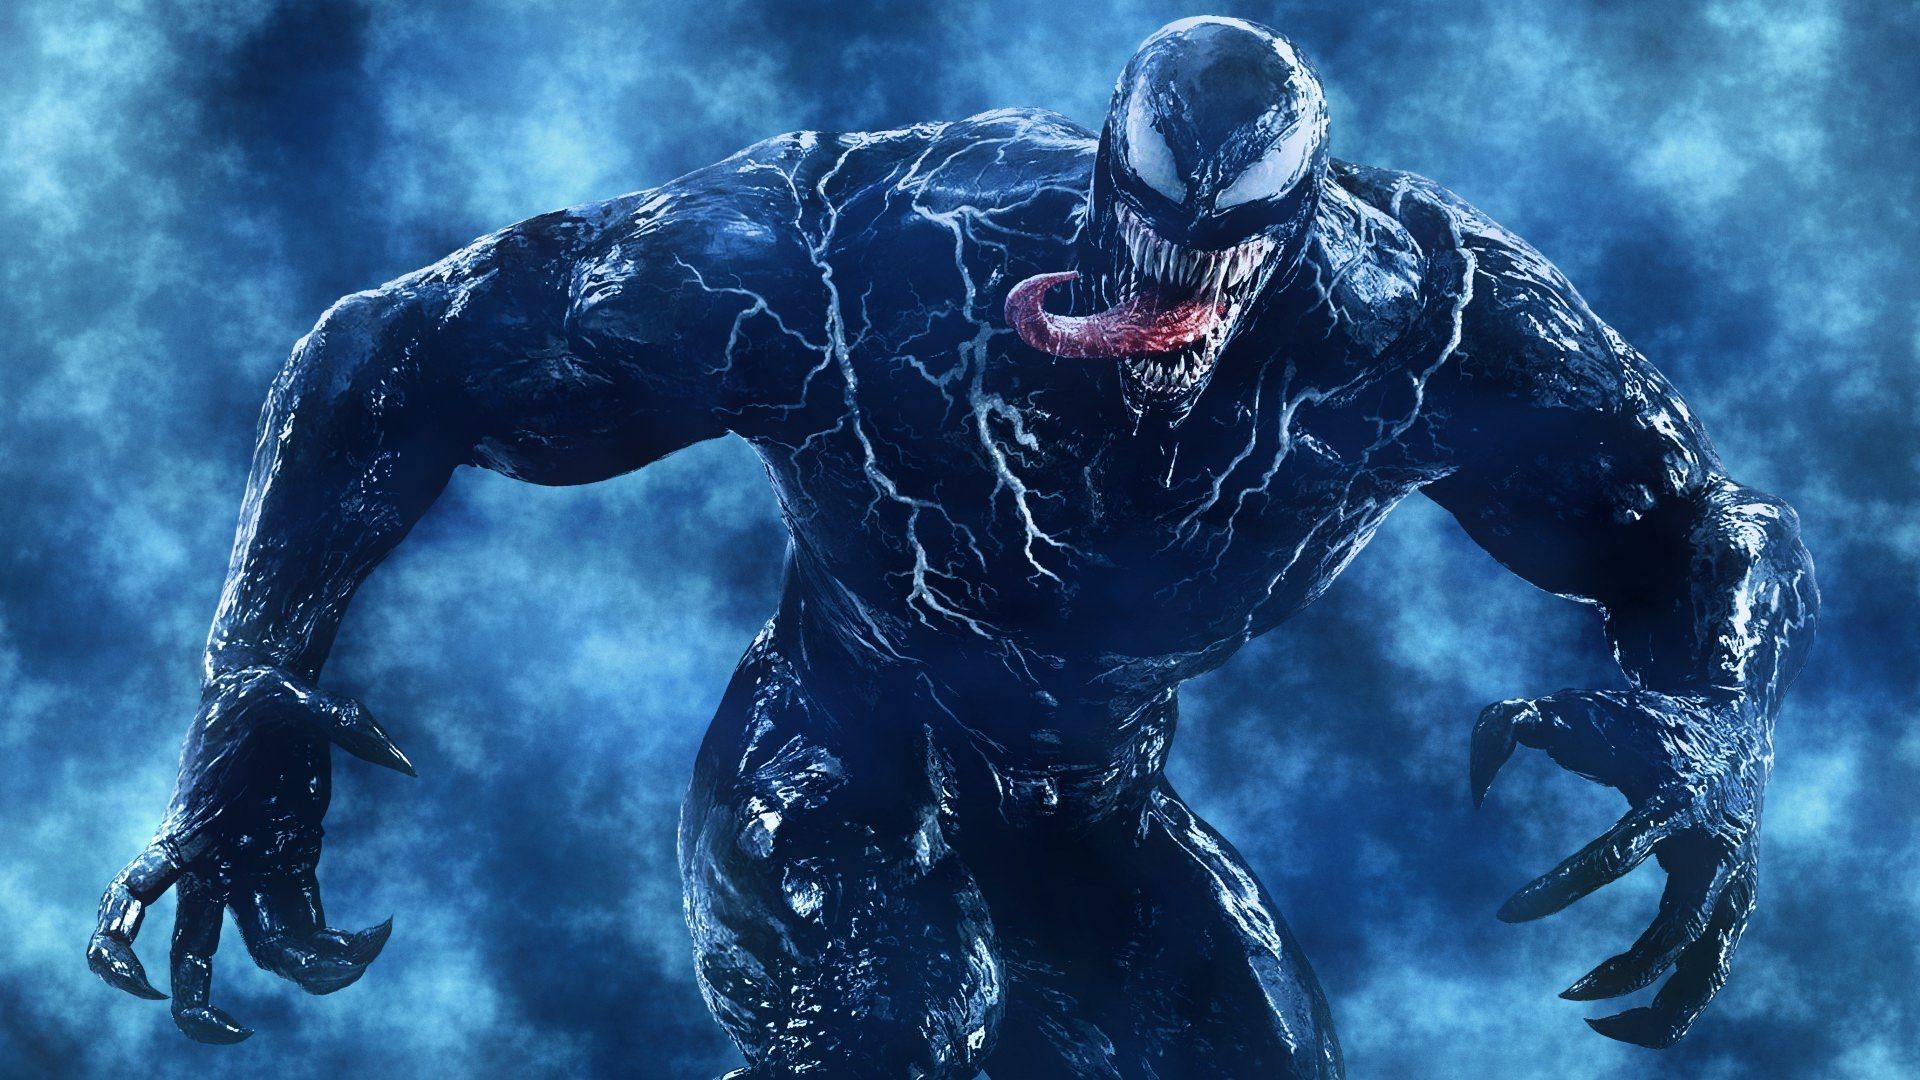 2020 Venom 2 Art Wallpaper, HD Movies 4K Wallpapers, Image